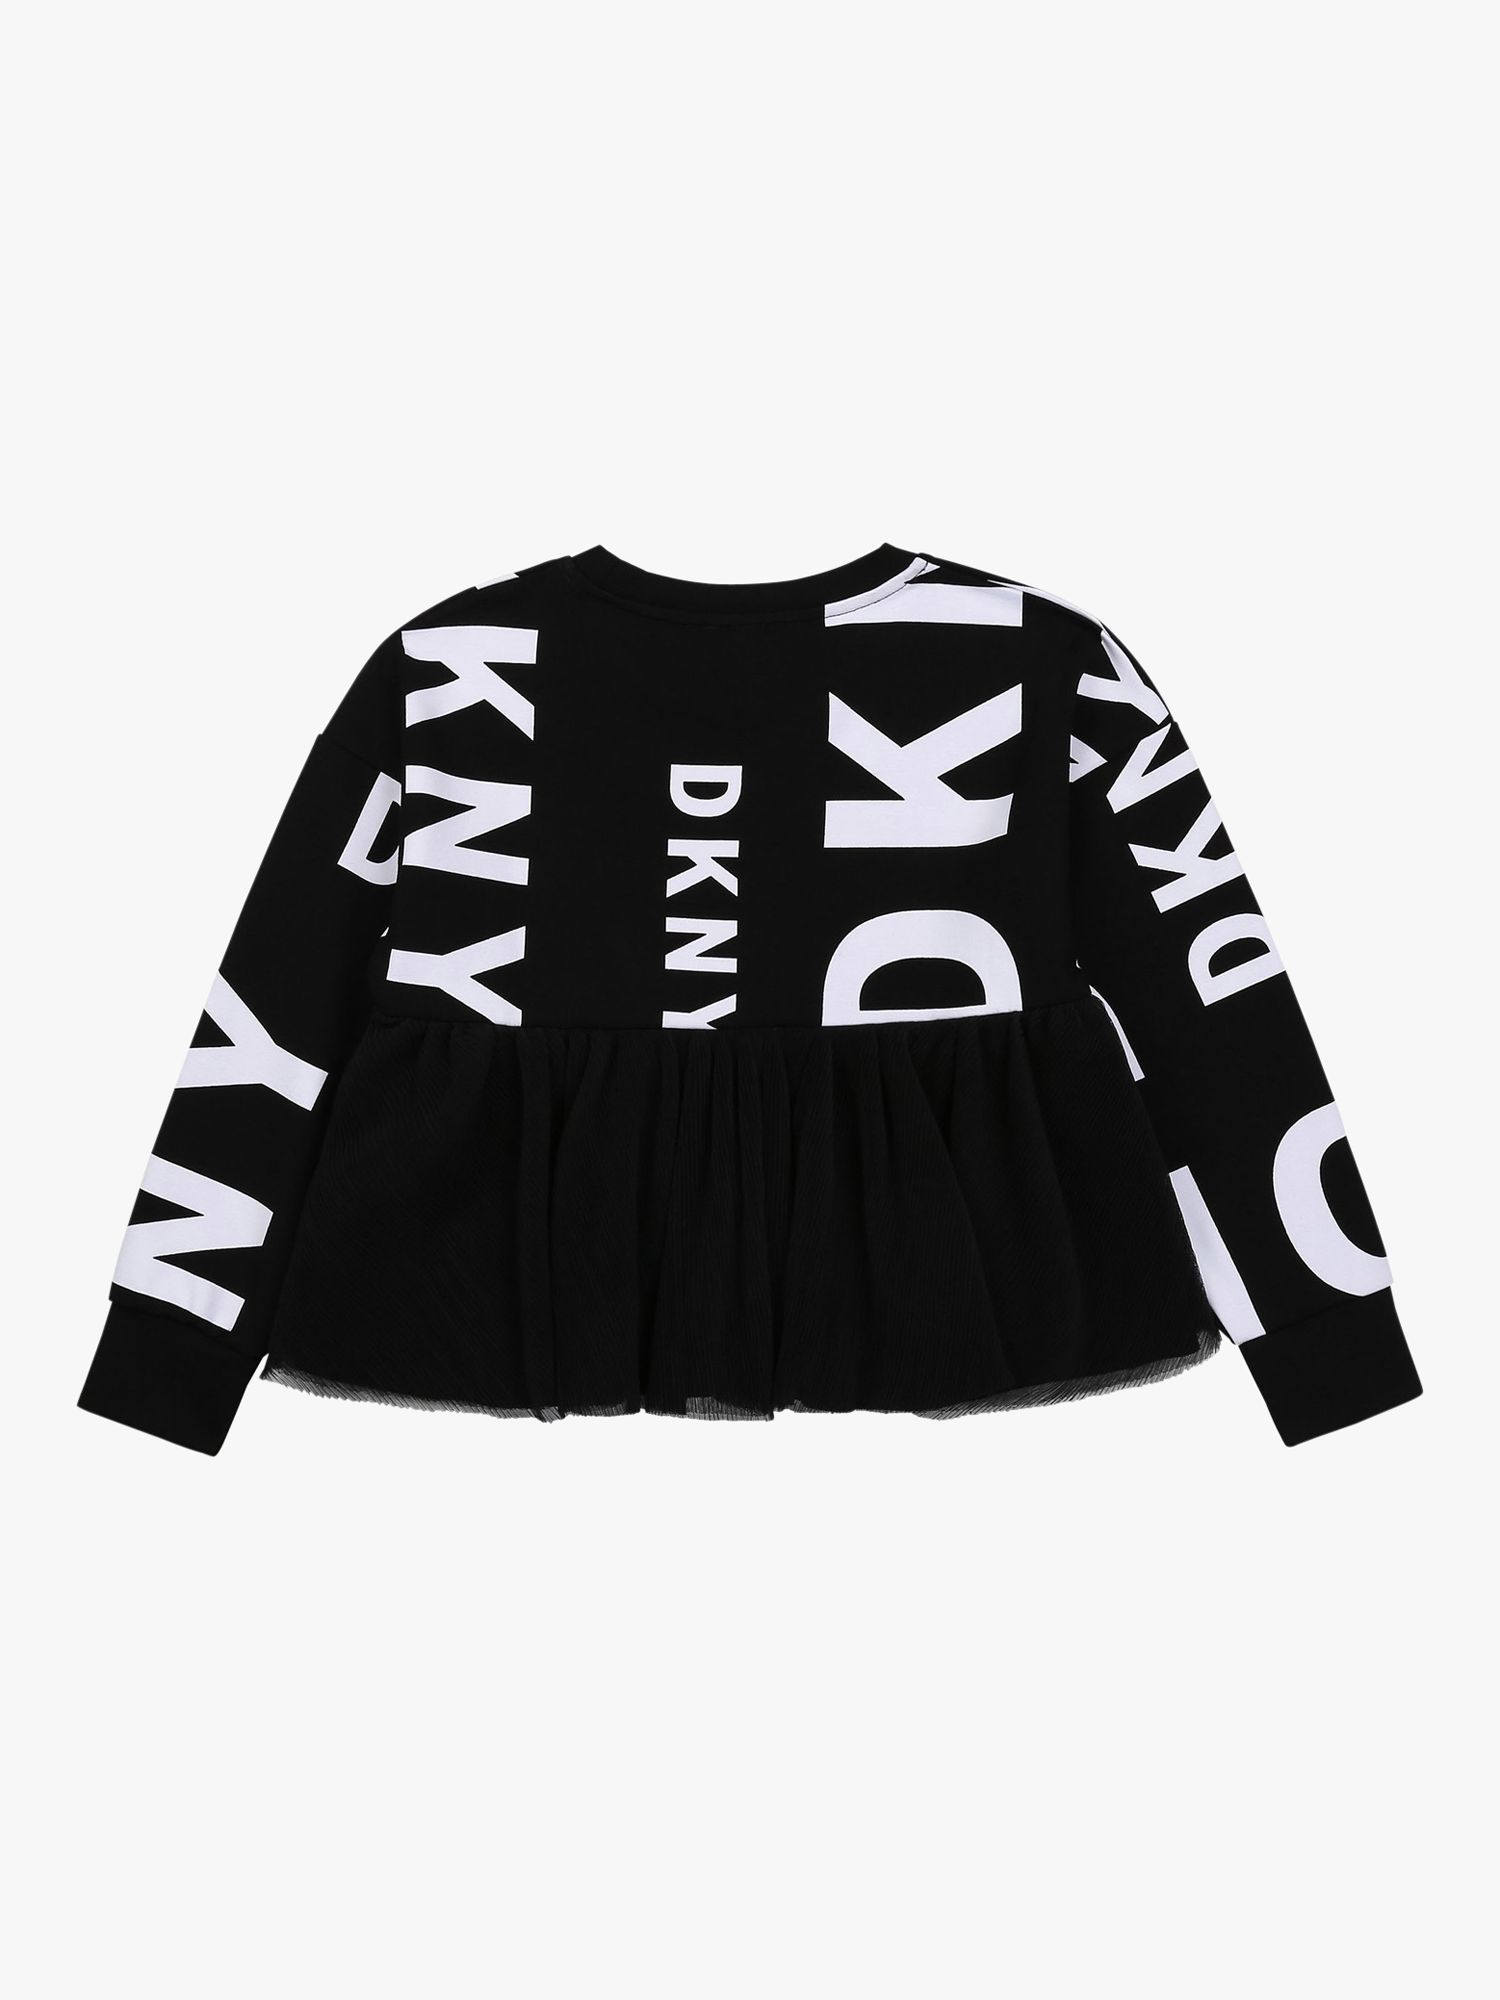 DKNY Sweatshirt Branded Sweatshirt full-sleeve crew neck White DKNY Fashion  Brand sweatshirt for men –